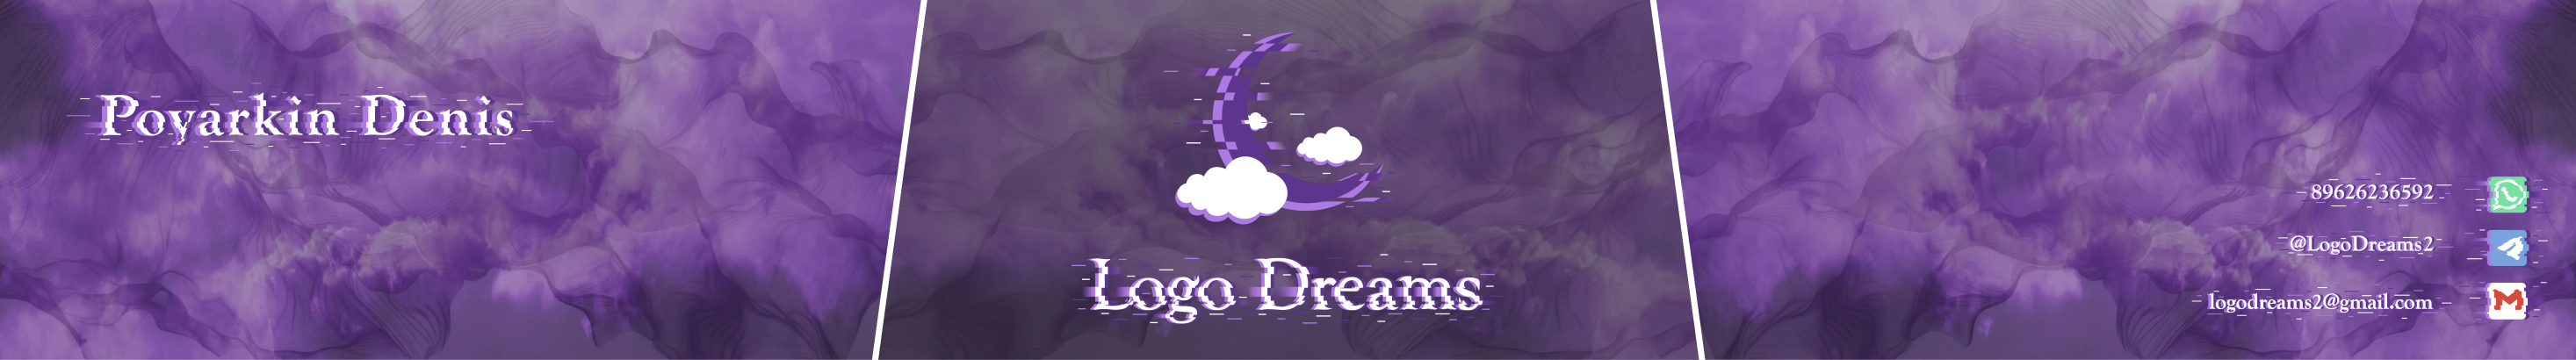 Banner de perfil de Logo Dreams